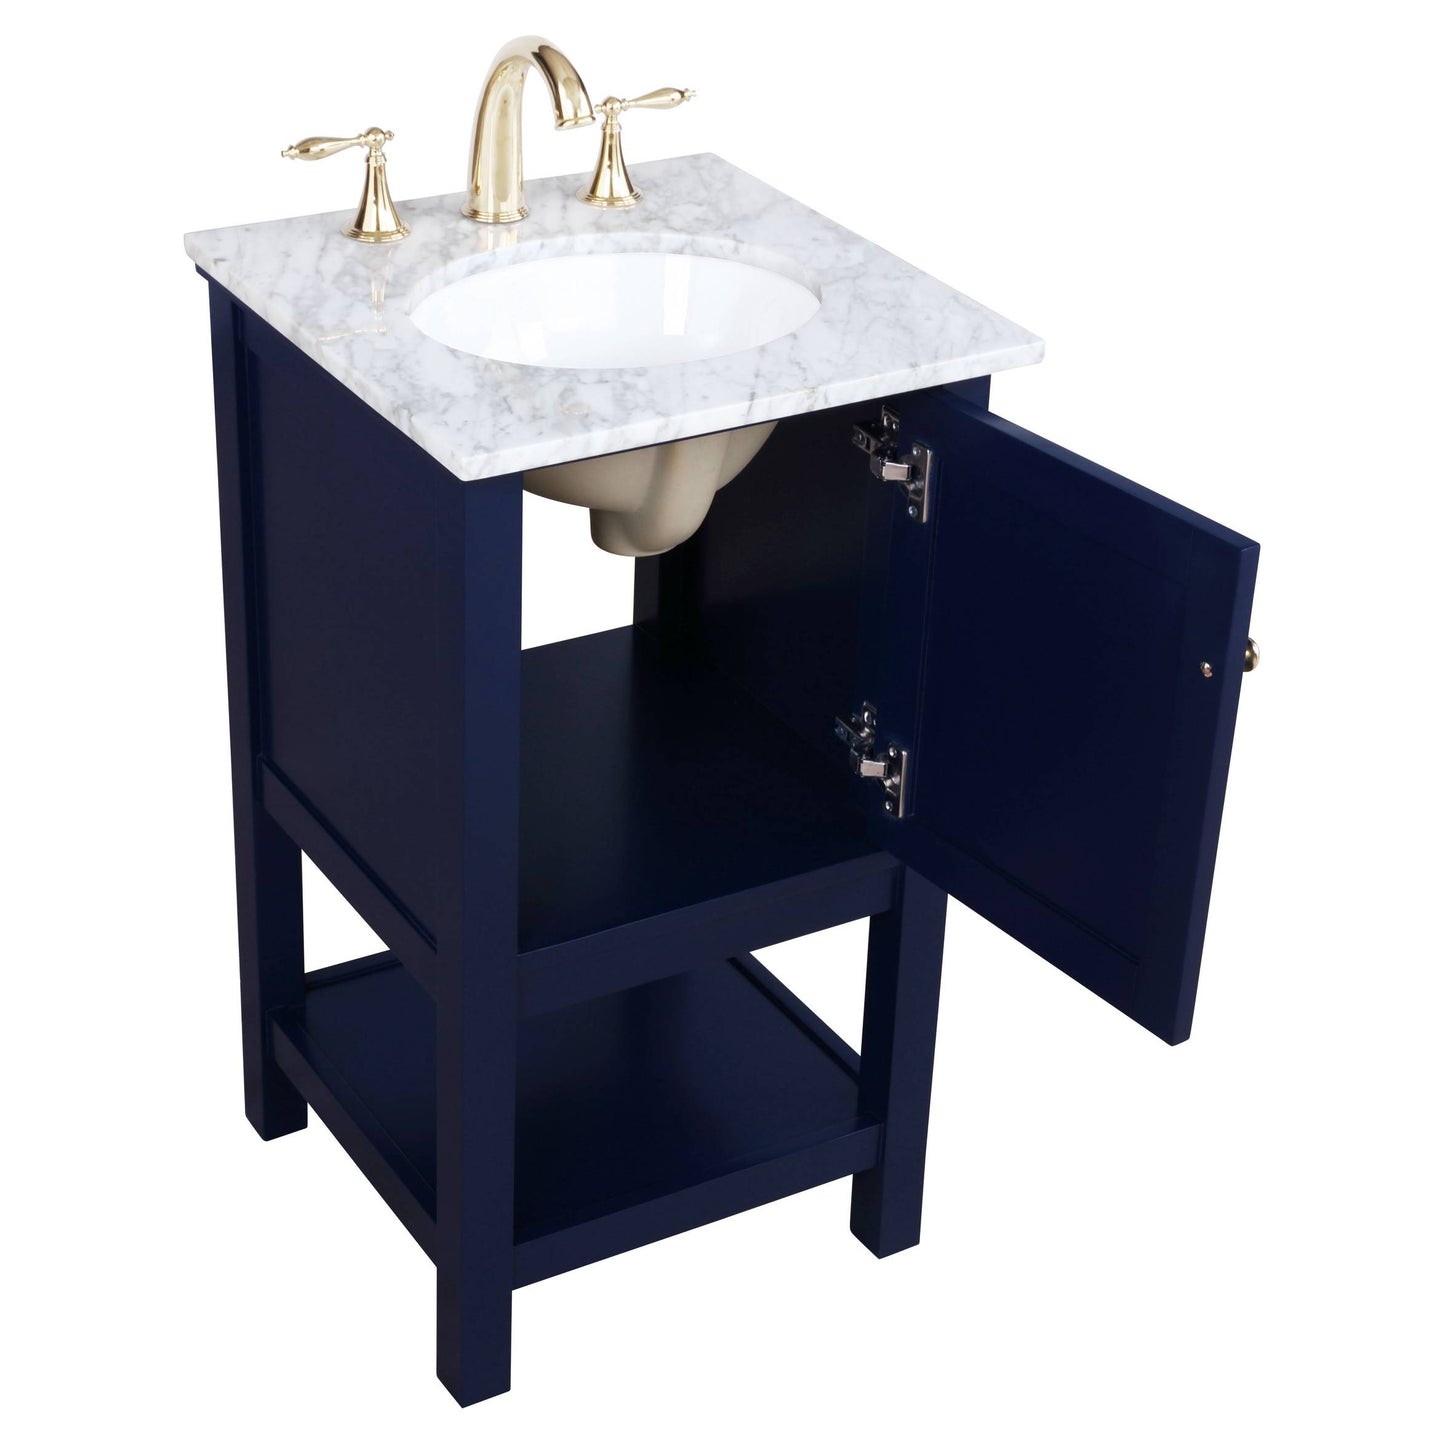 VF27019BL 19" Single Bathroom Vanity in Blue